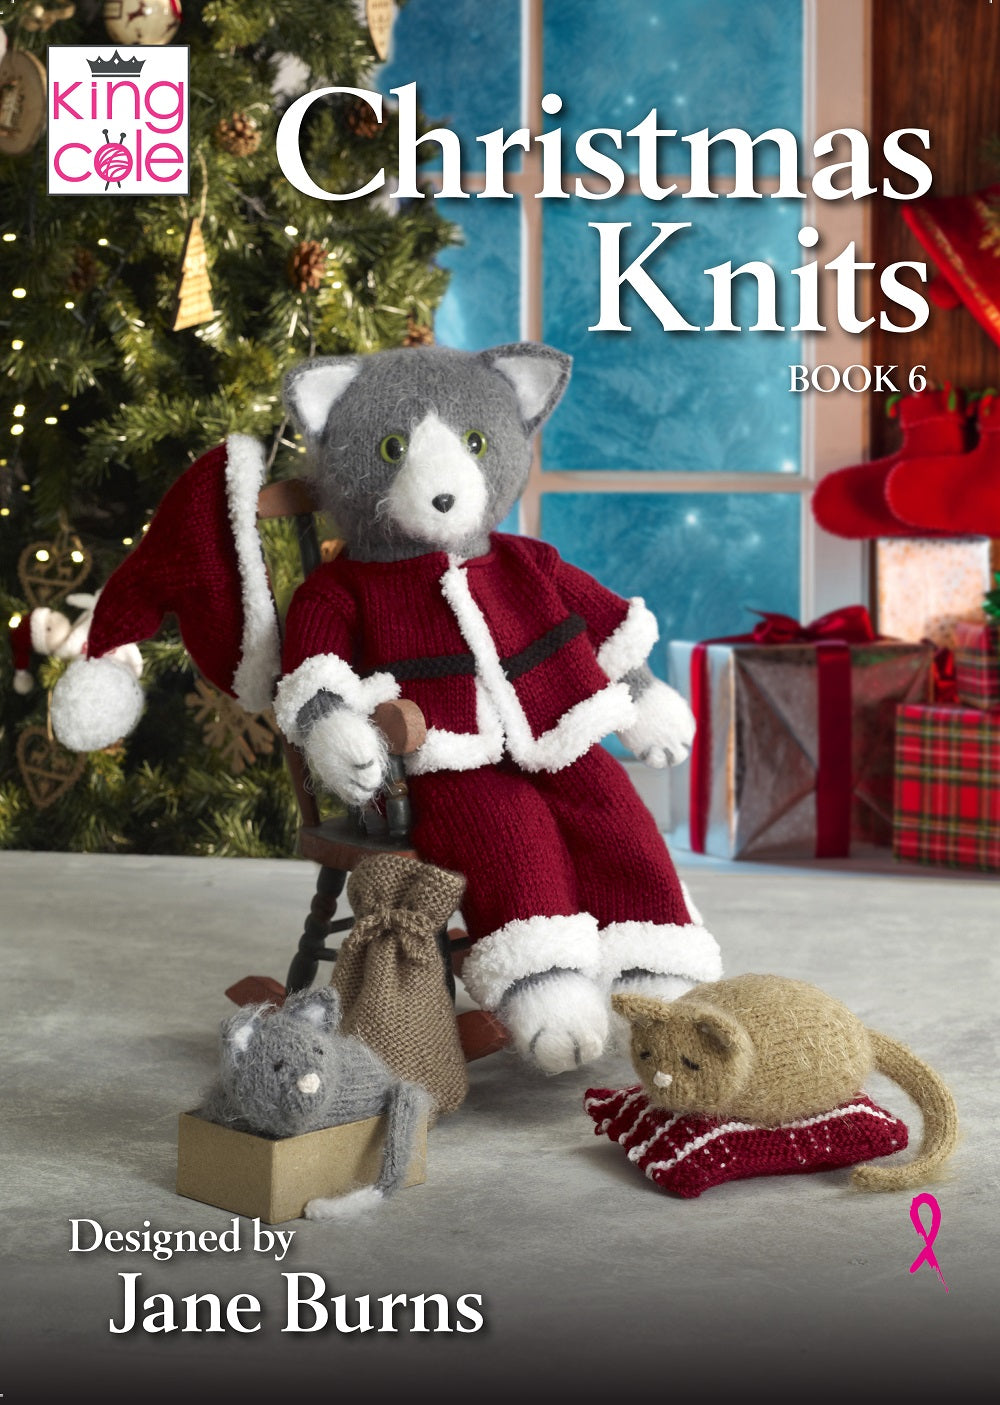 King Cole Christmas Knit Books